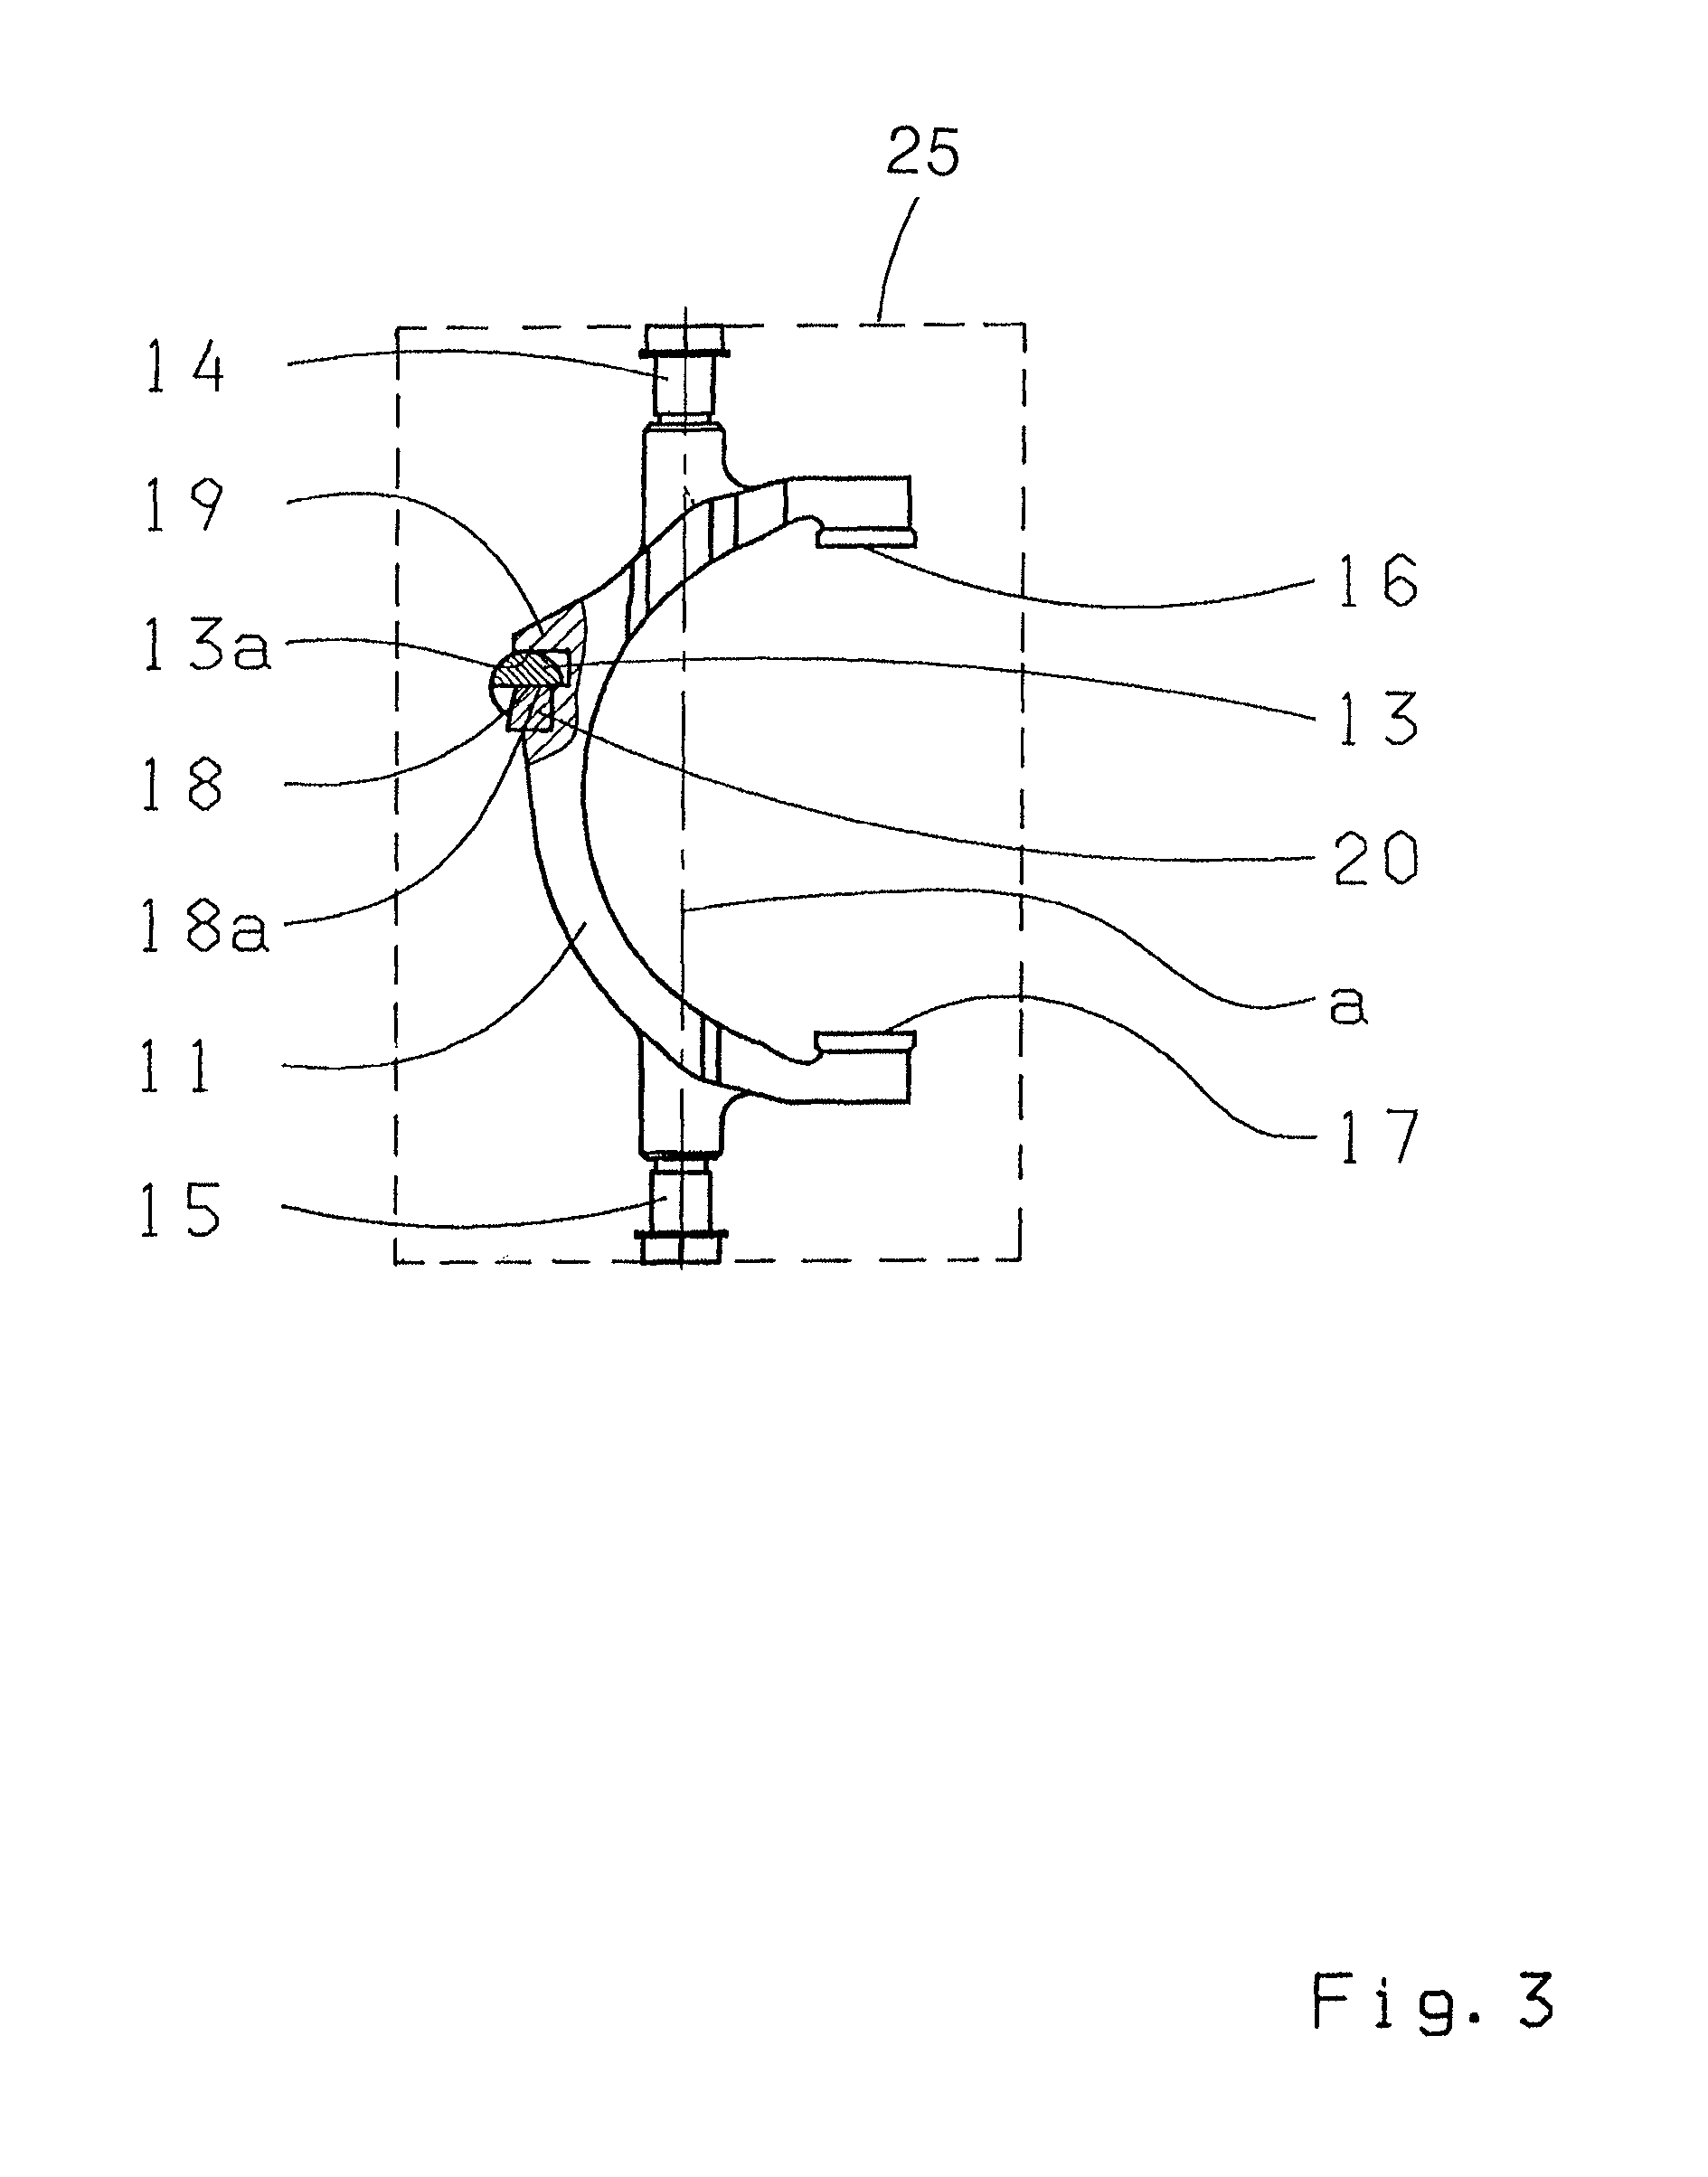 Arrangement of a gear shift fork in a transmission